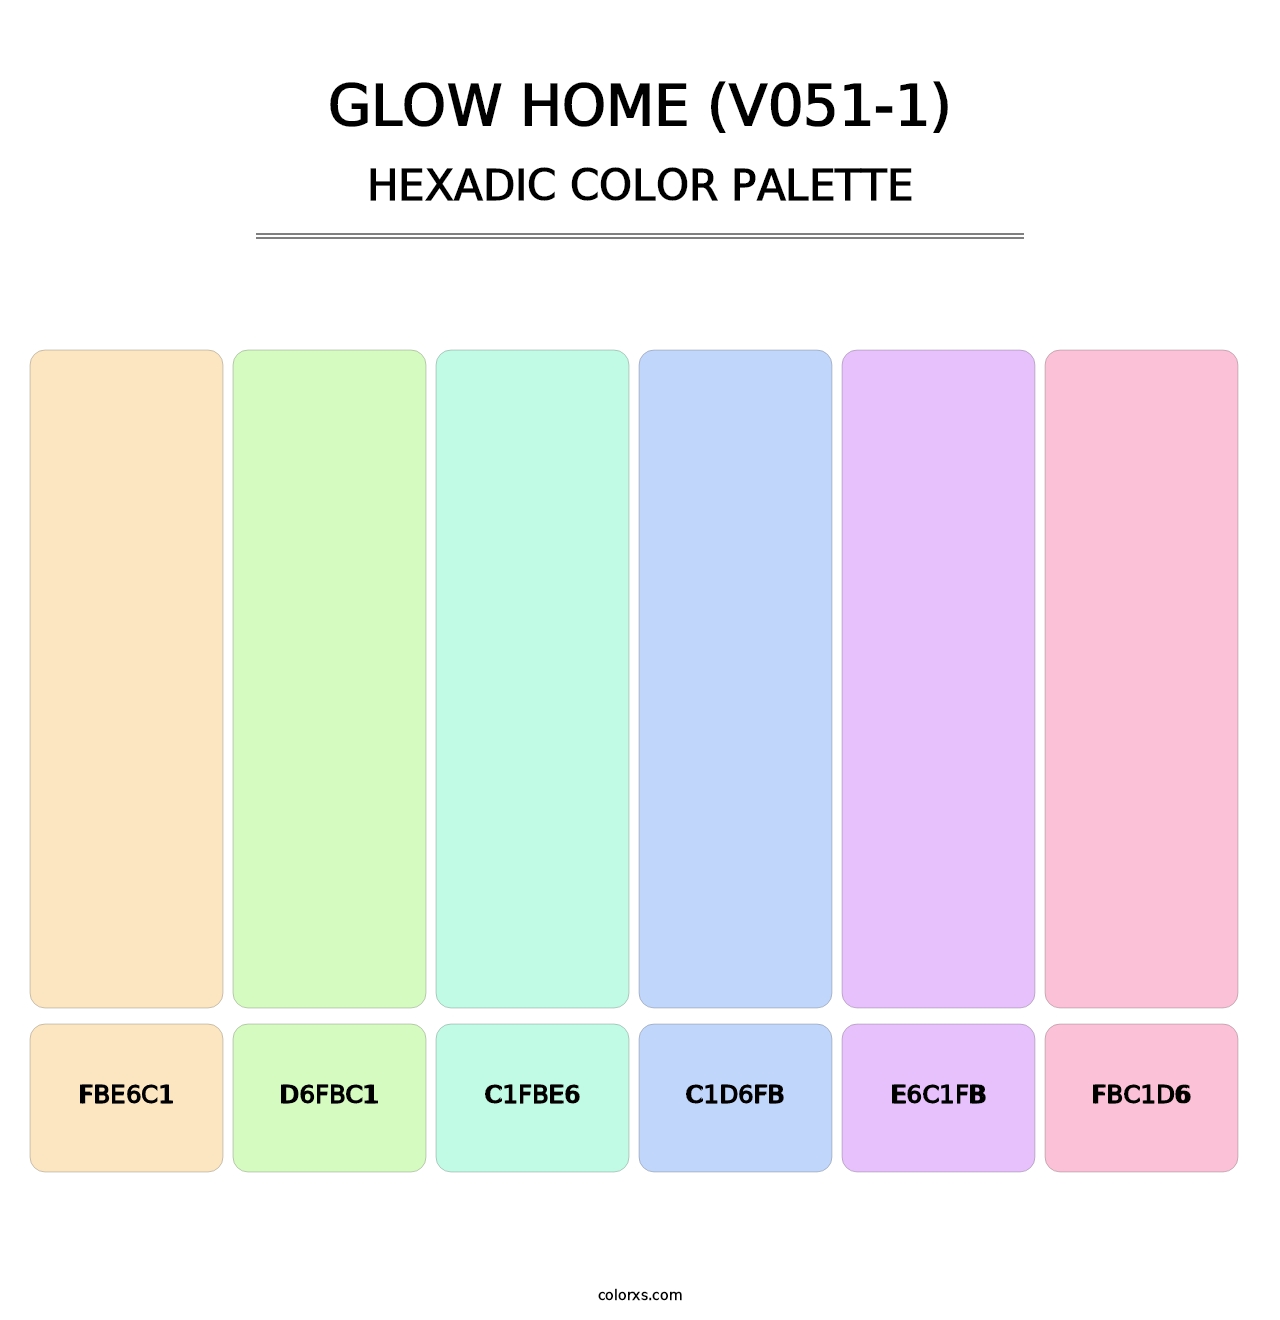 Glow Home (V051-1) - Hexadic Color Palette